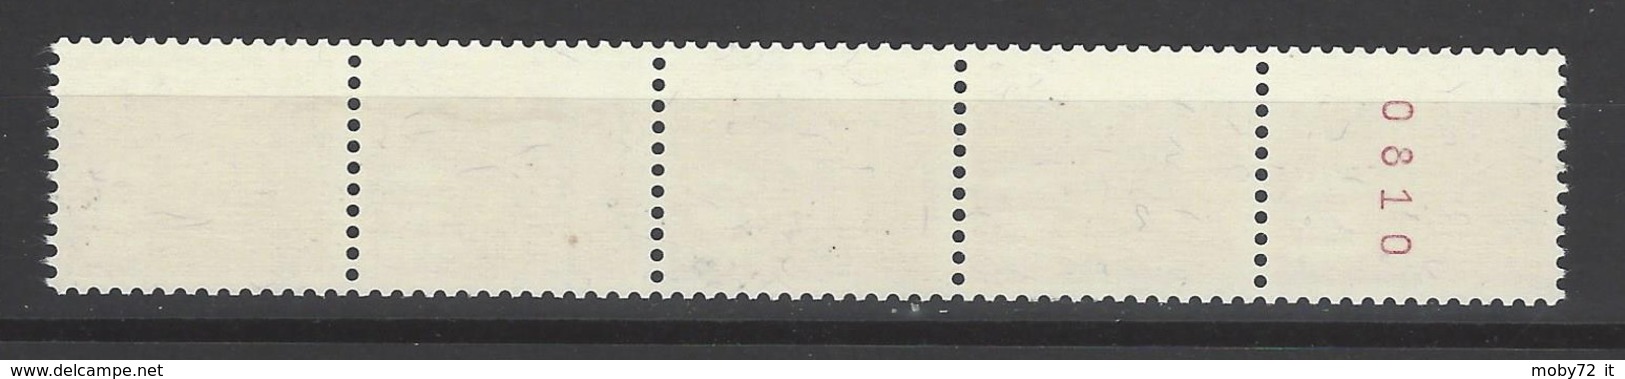 Svizzera - 1970 - Usato/used - Rollenmarken - Mi N. 933 - Franqueo